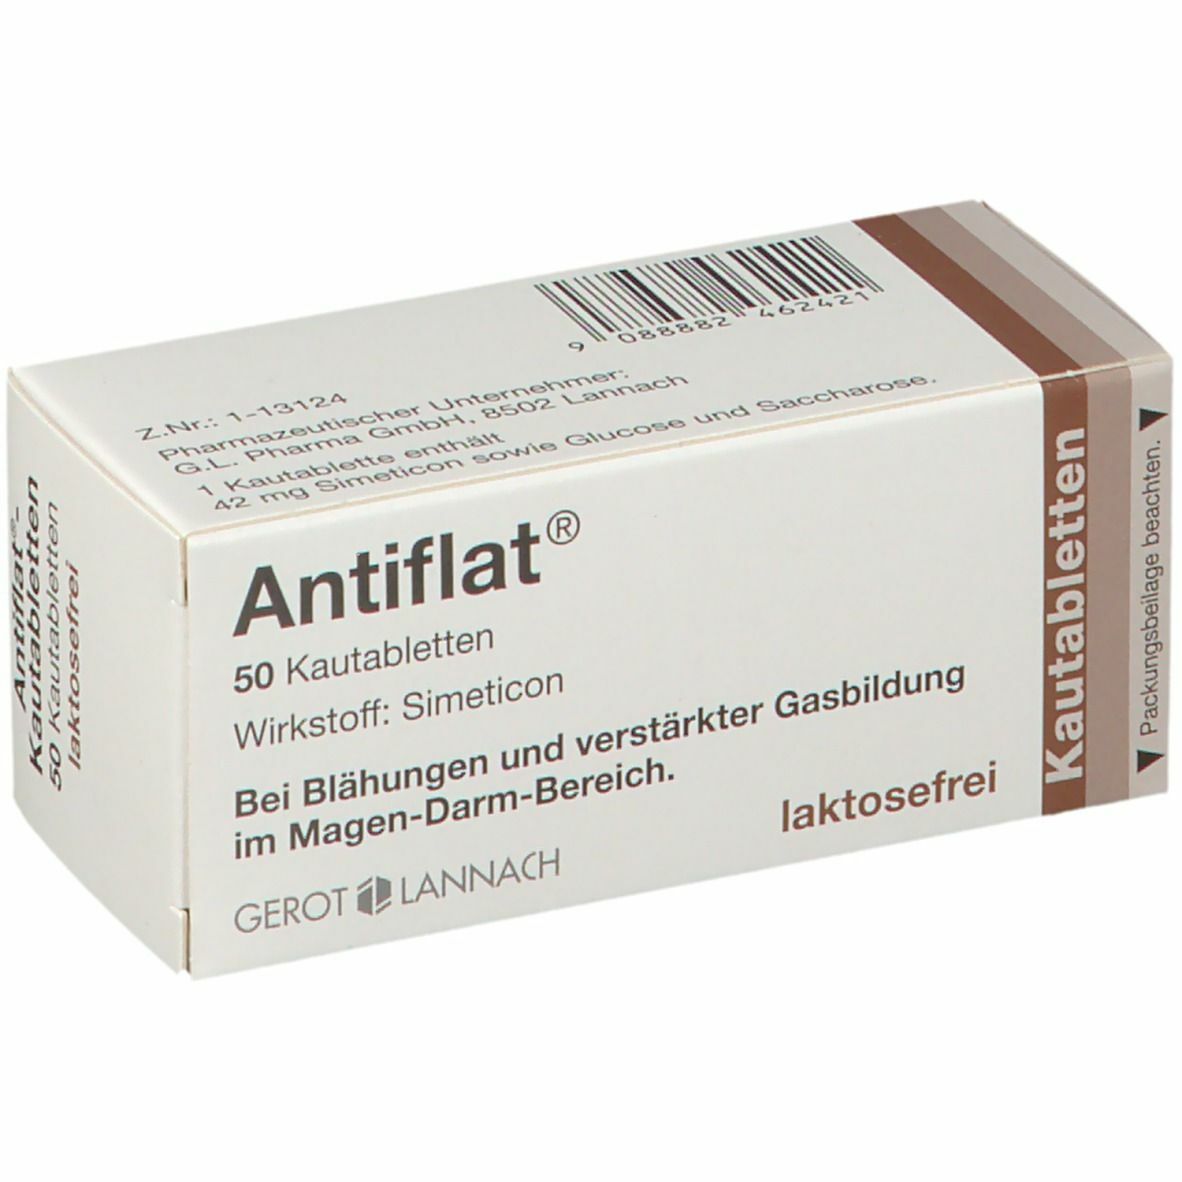 Antiflat®